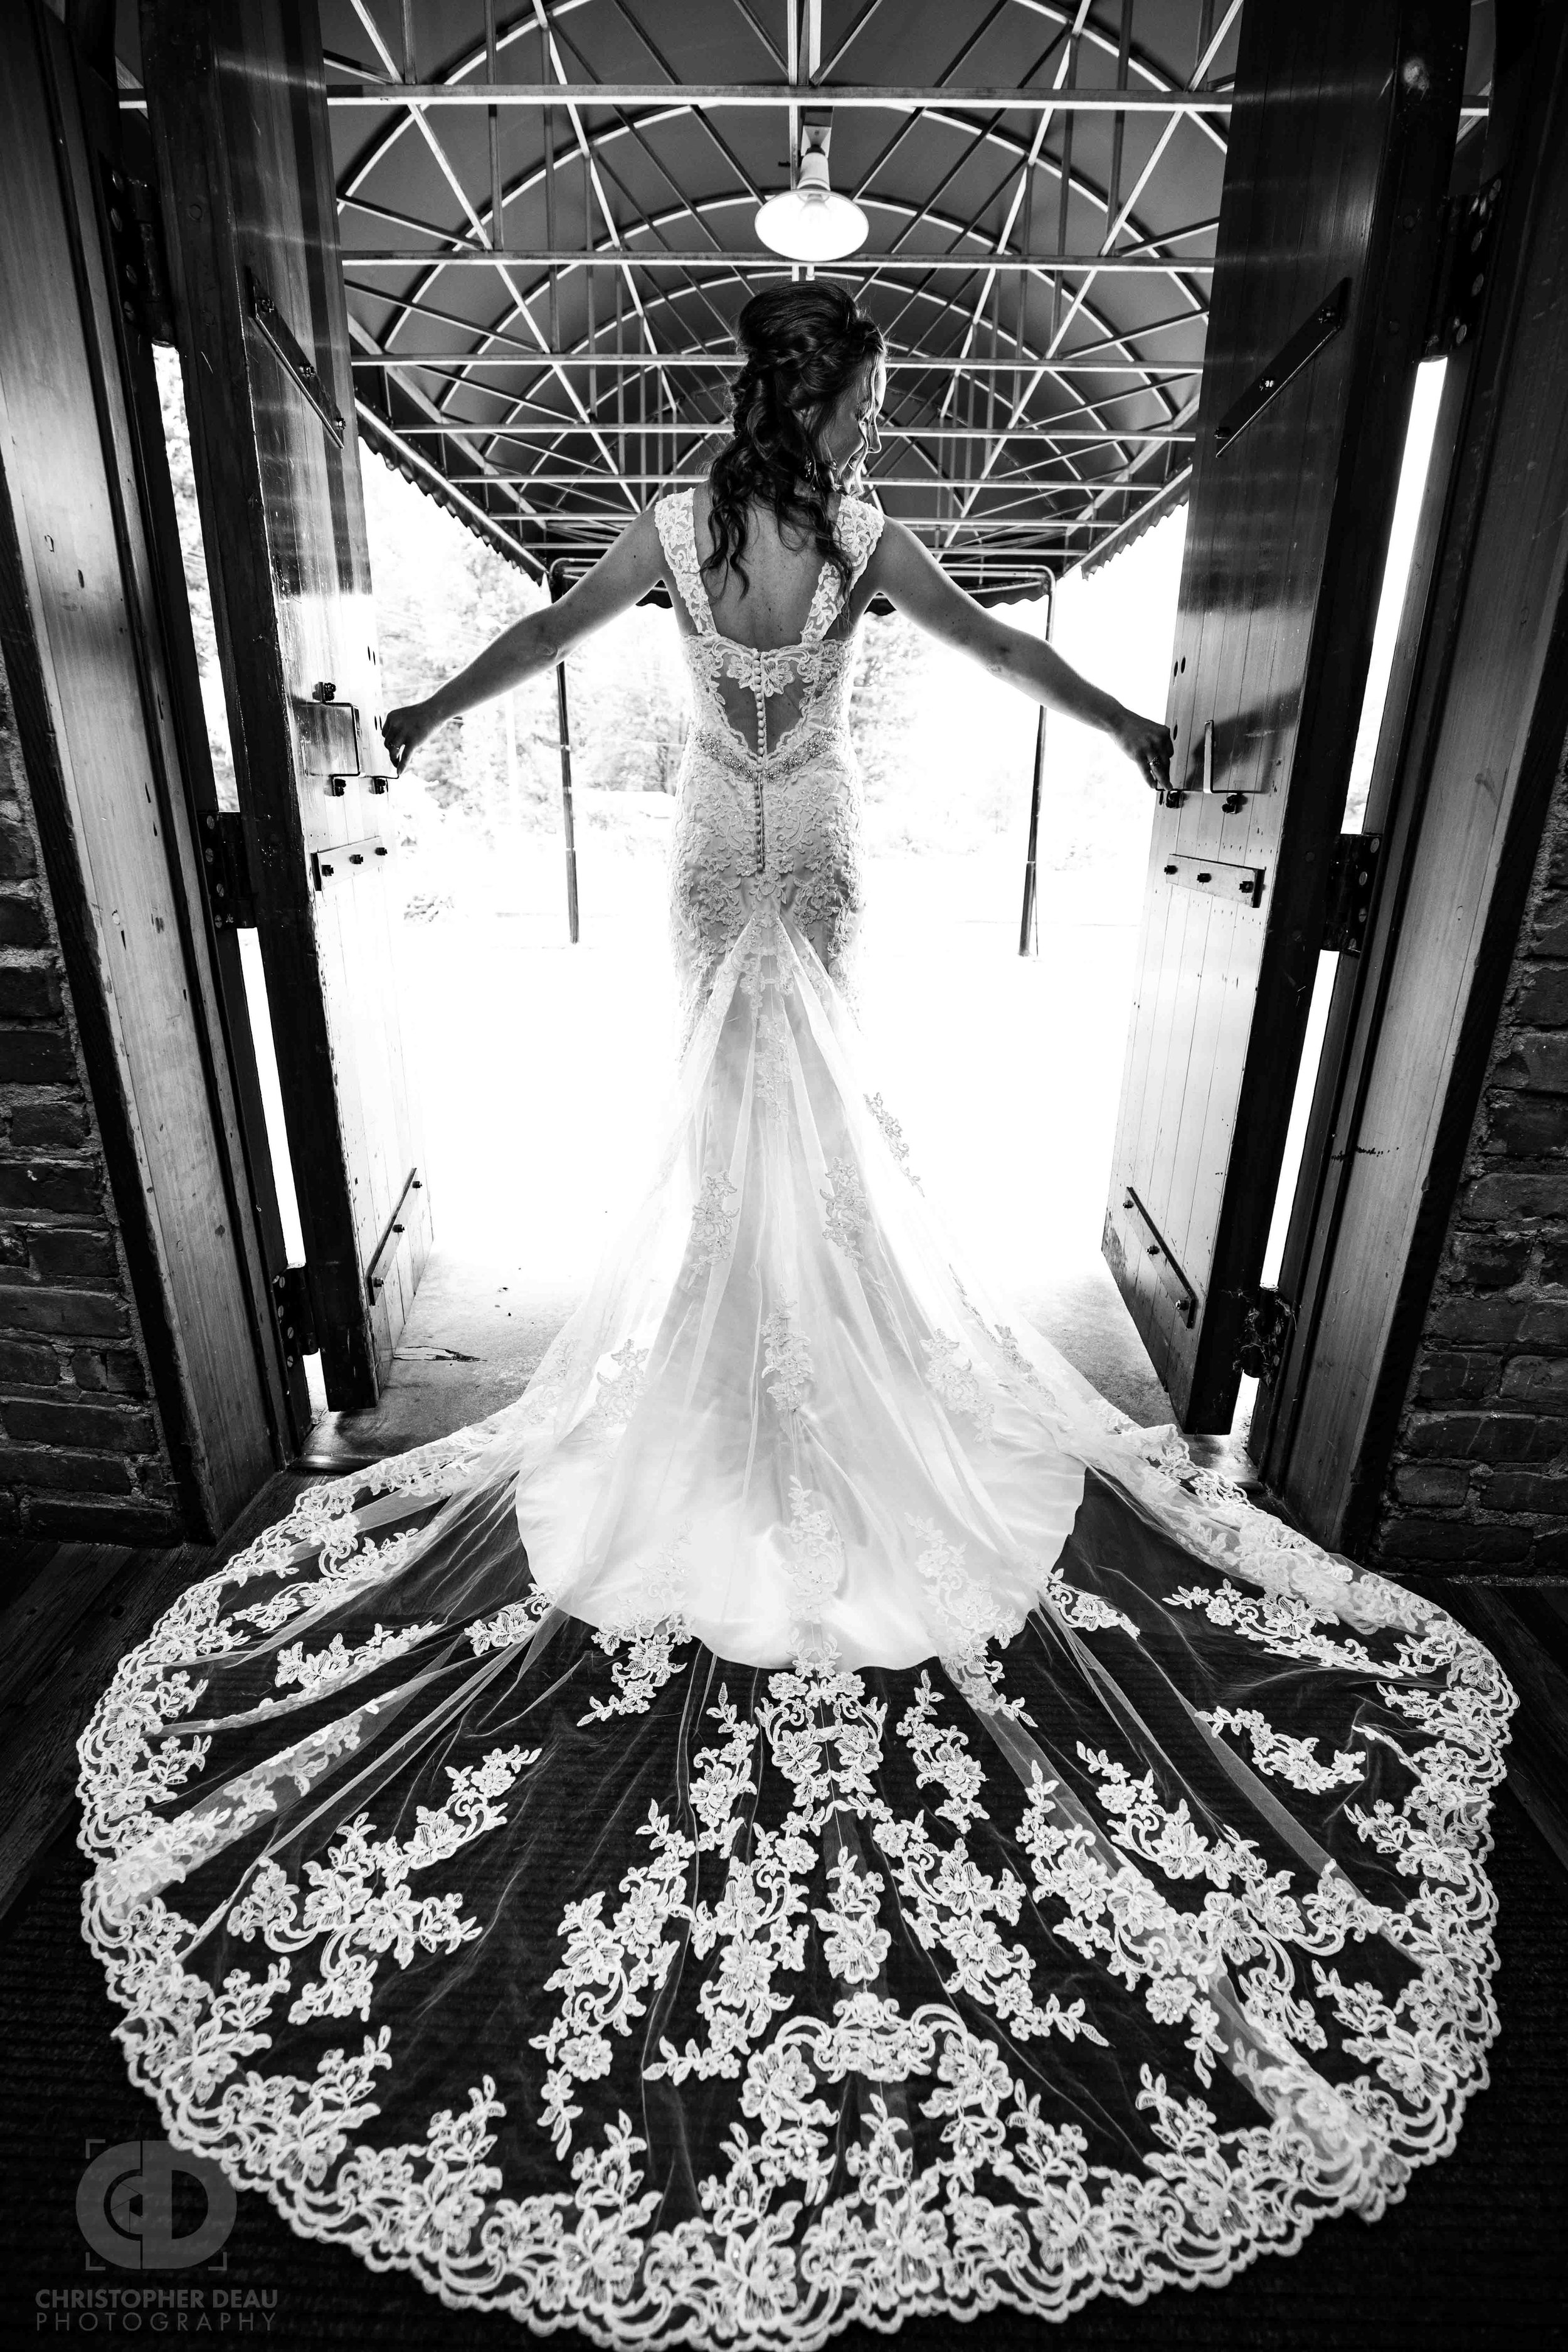  Stunning bride in flowing white lace dress standing in door way 